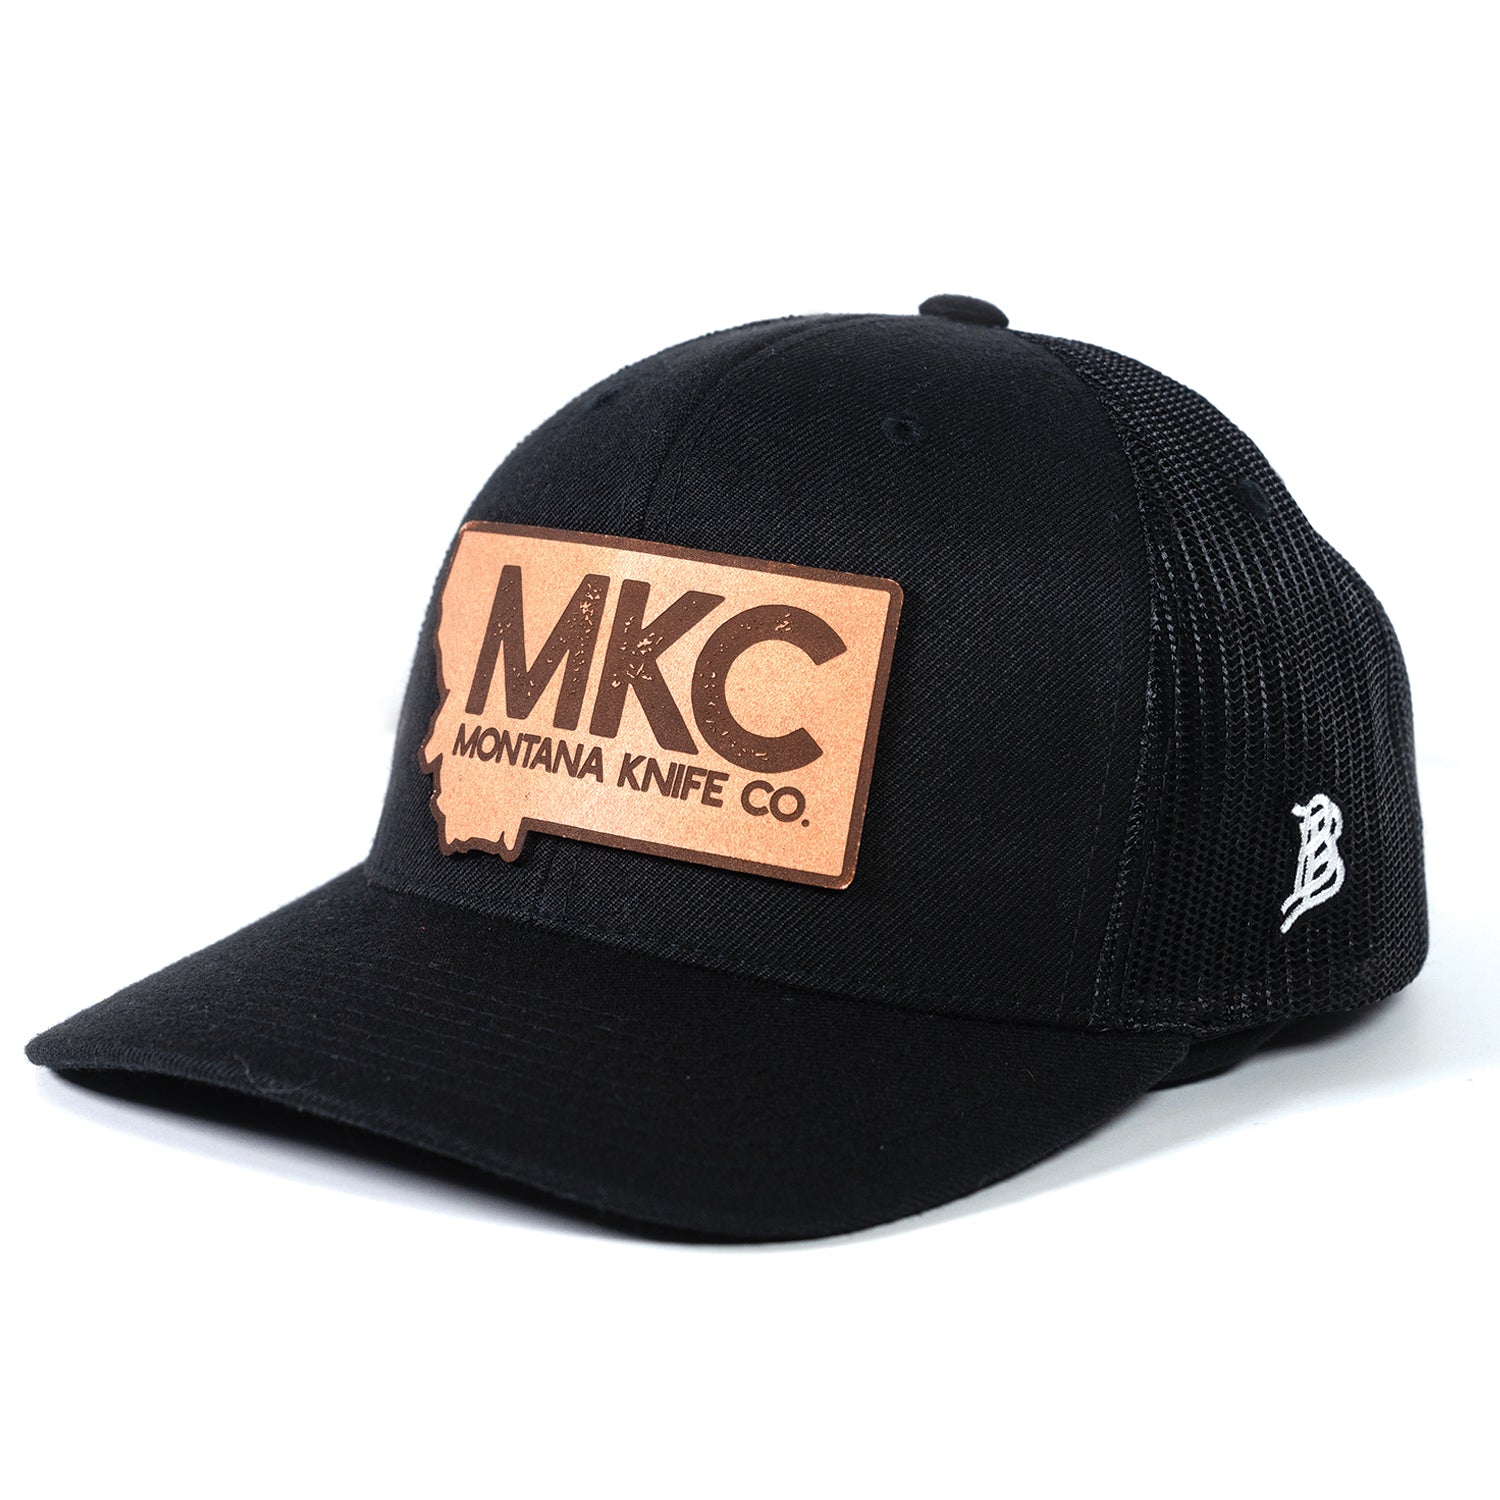 MKC STATE PATCH - BLACK TRUCKER SNAPBACK